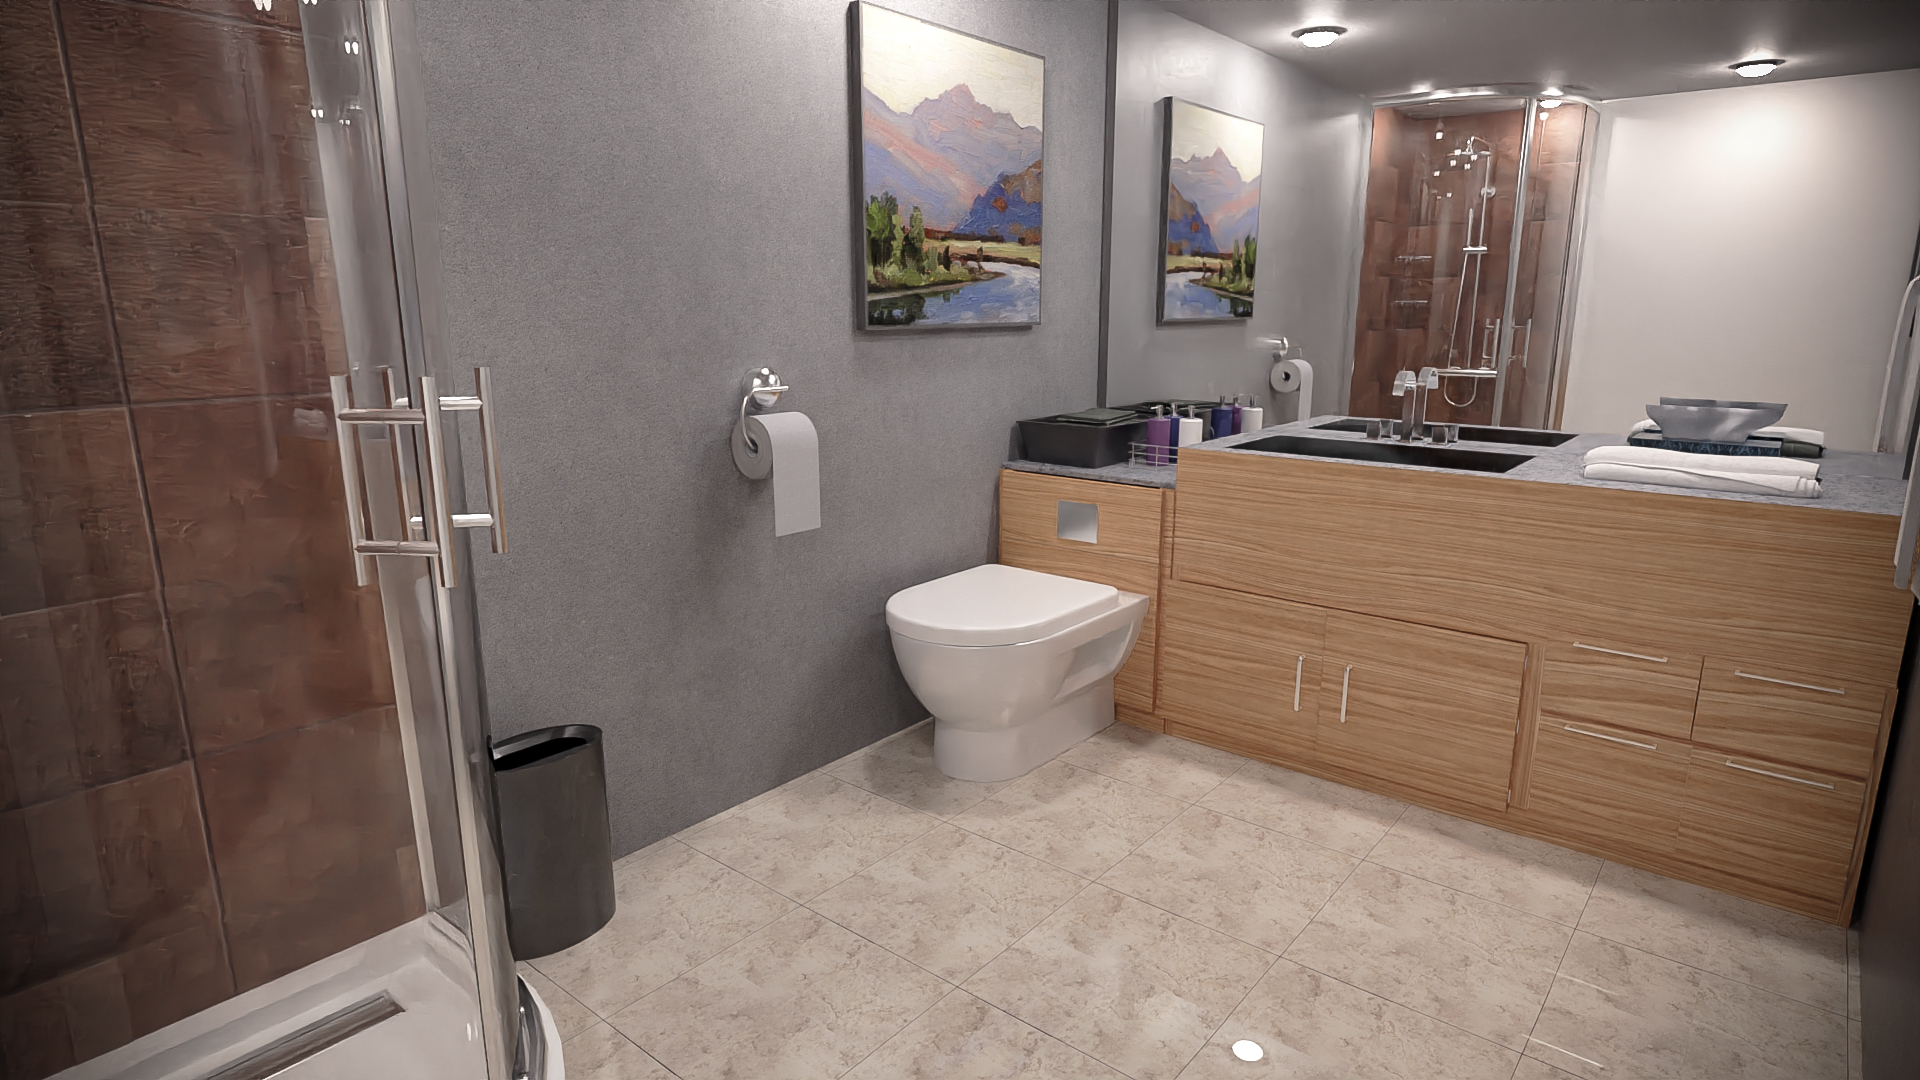 Lovable Bathroom by: Tesla3dCorp, 3D Models by Daz 3D